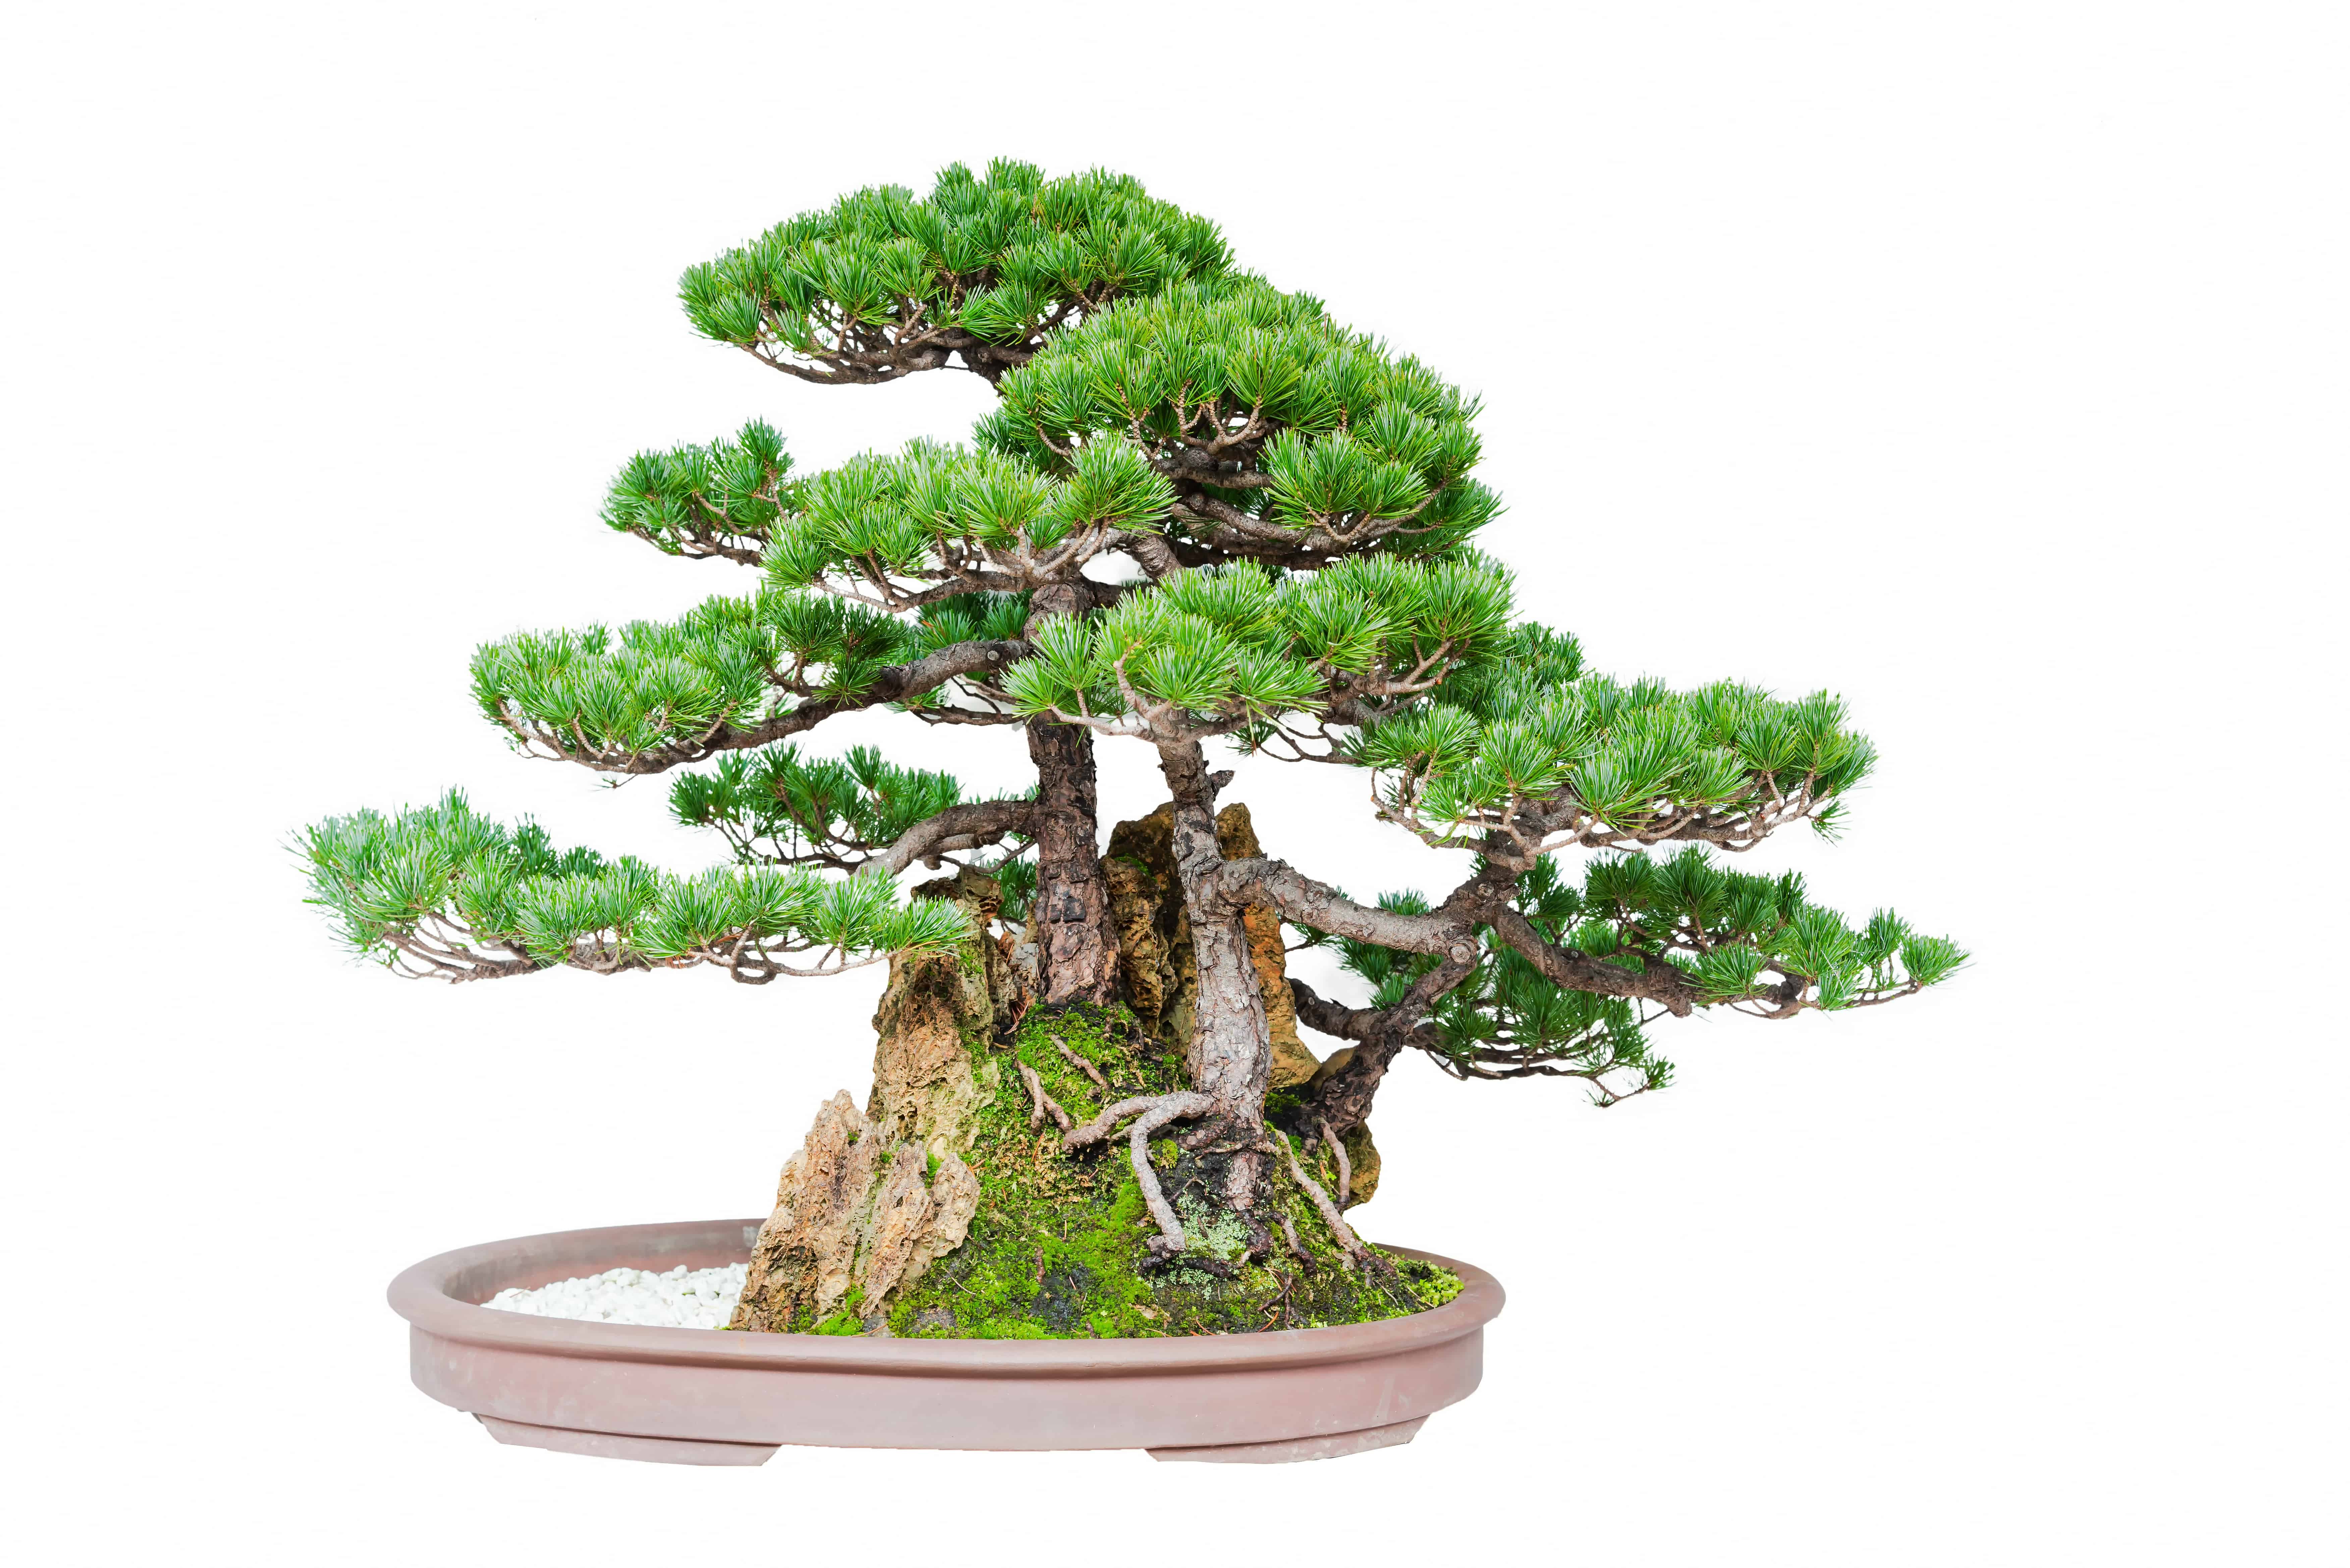 Buddhist Pine Bonsai Trees in One Bonsai Pot